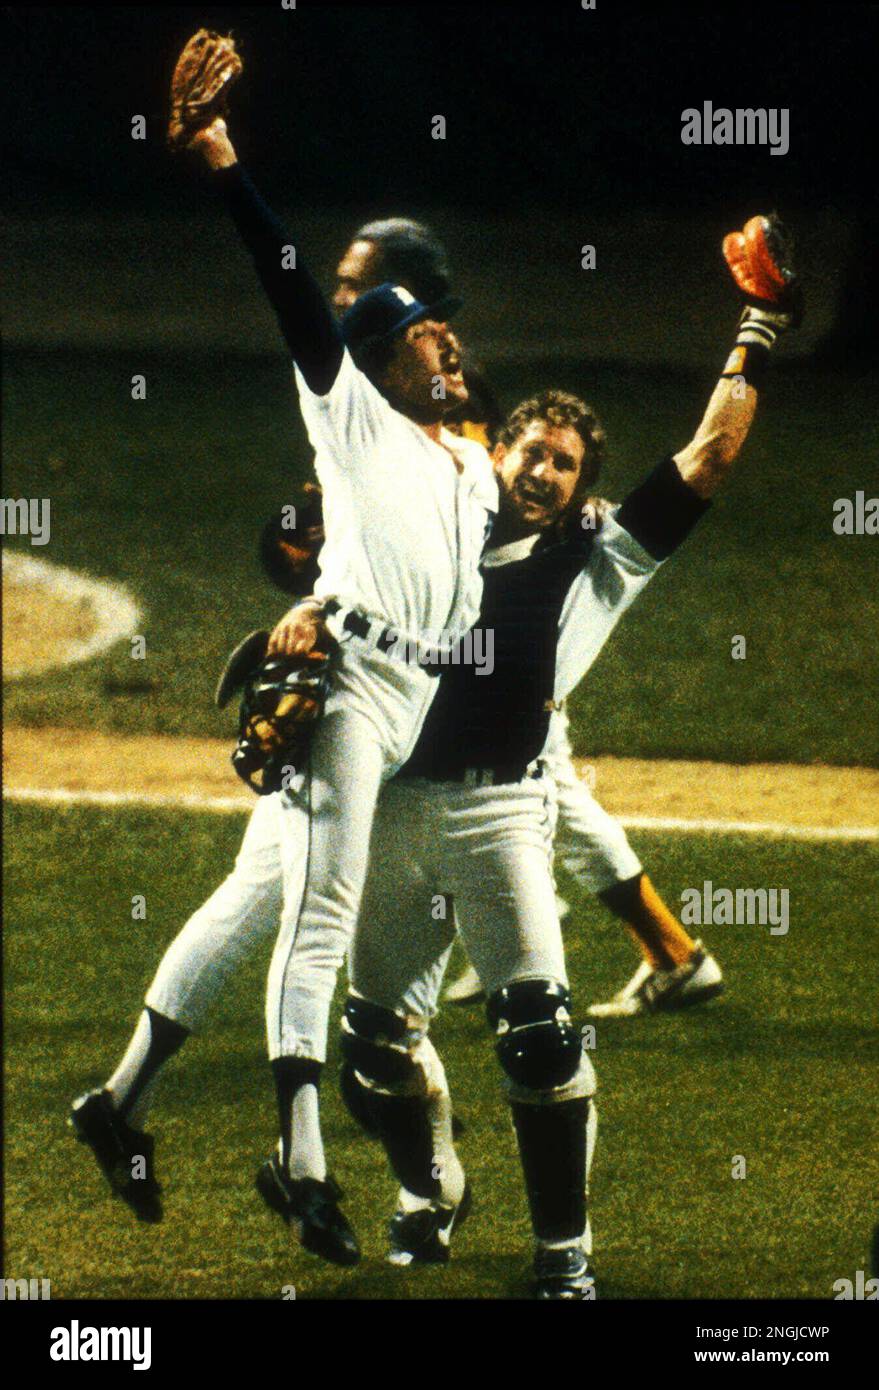 1984 World Series on DVD Detroit Tigers Vs San Diego Padres